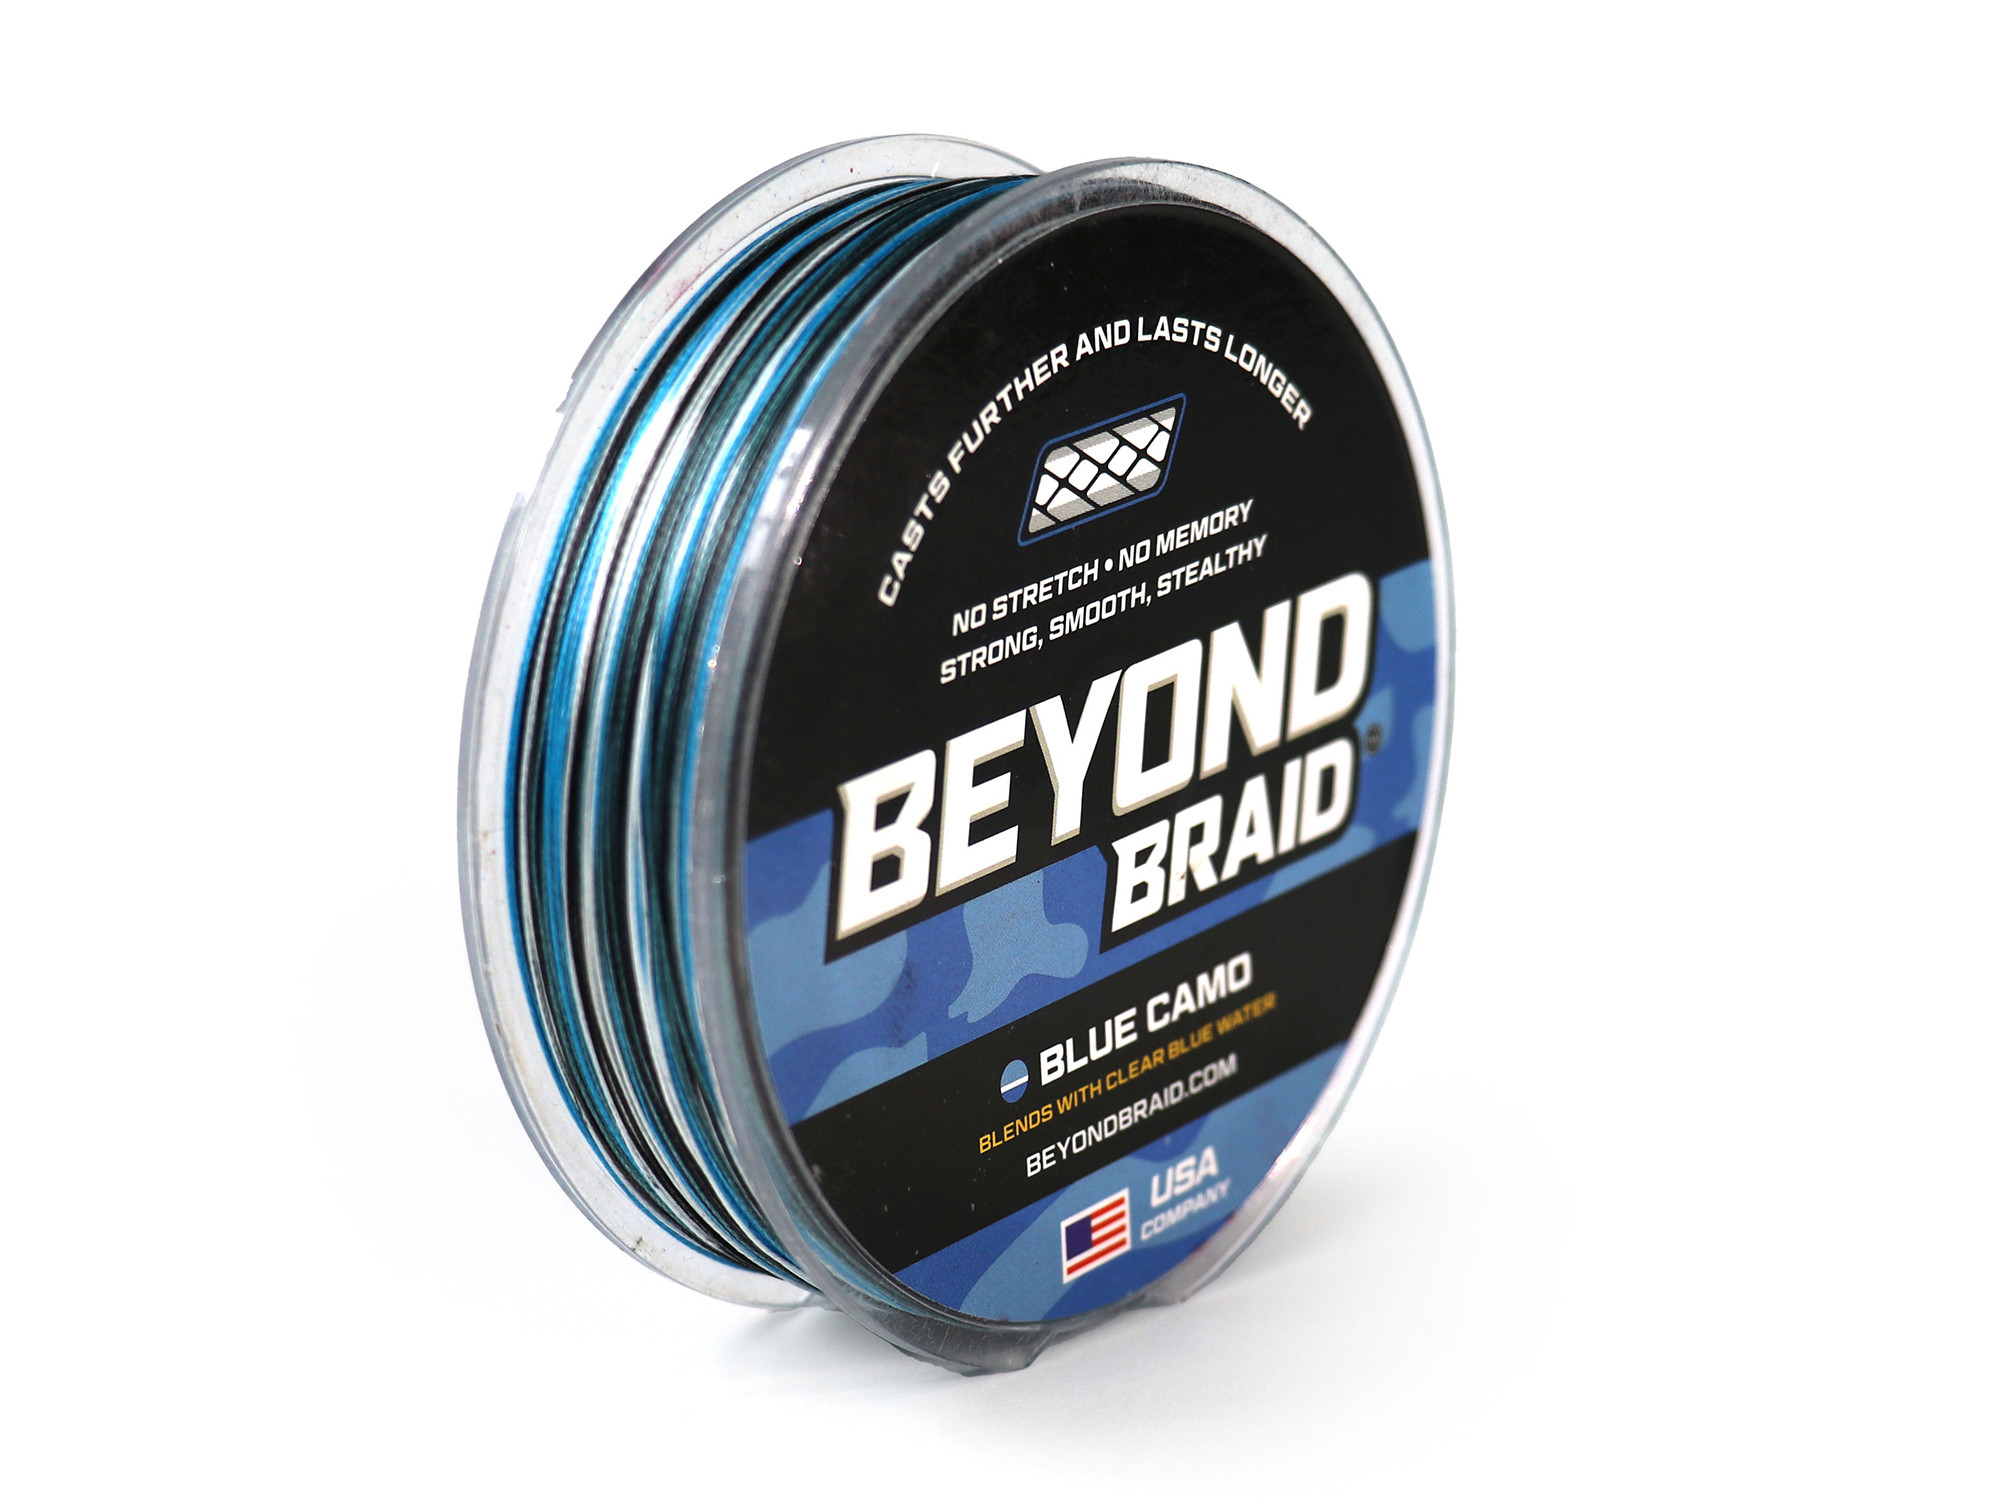 Beyond Braid (@beyondbraid), beyond braid 